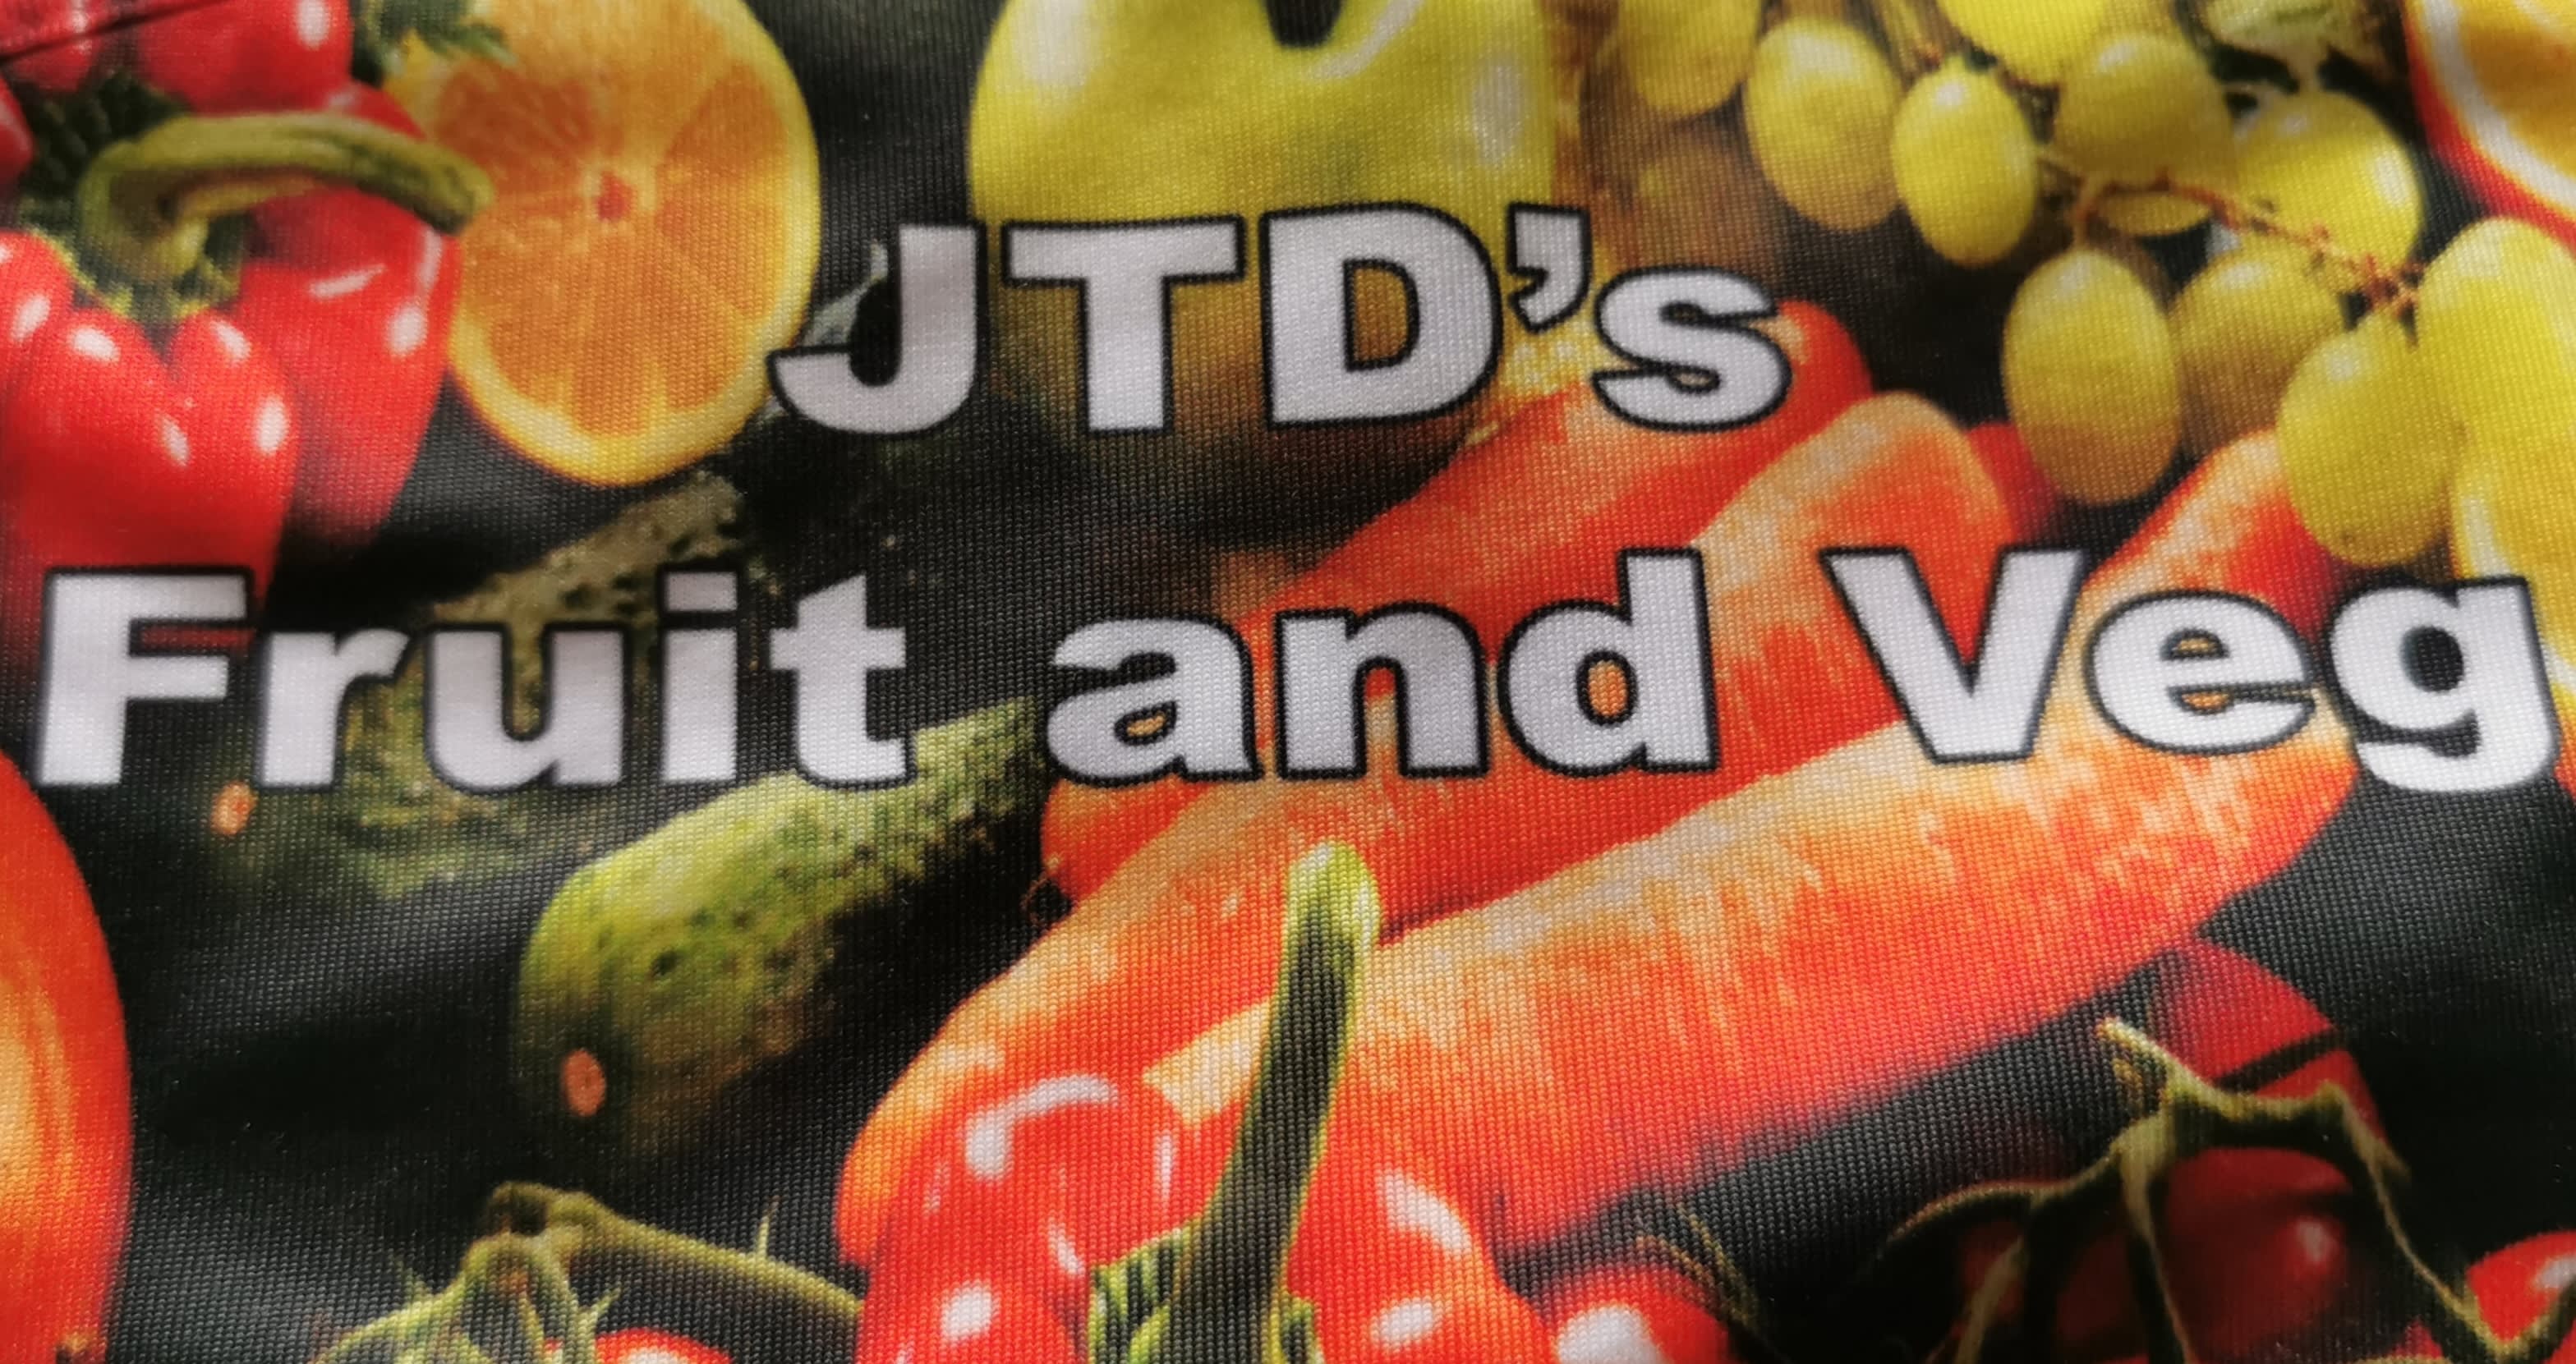 JTD's Fruit And Veg